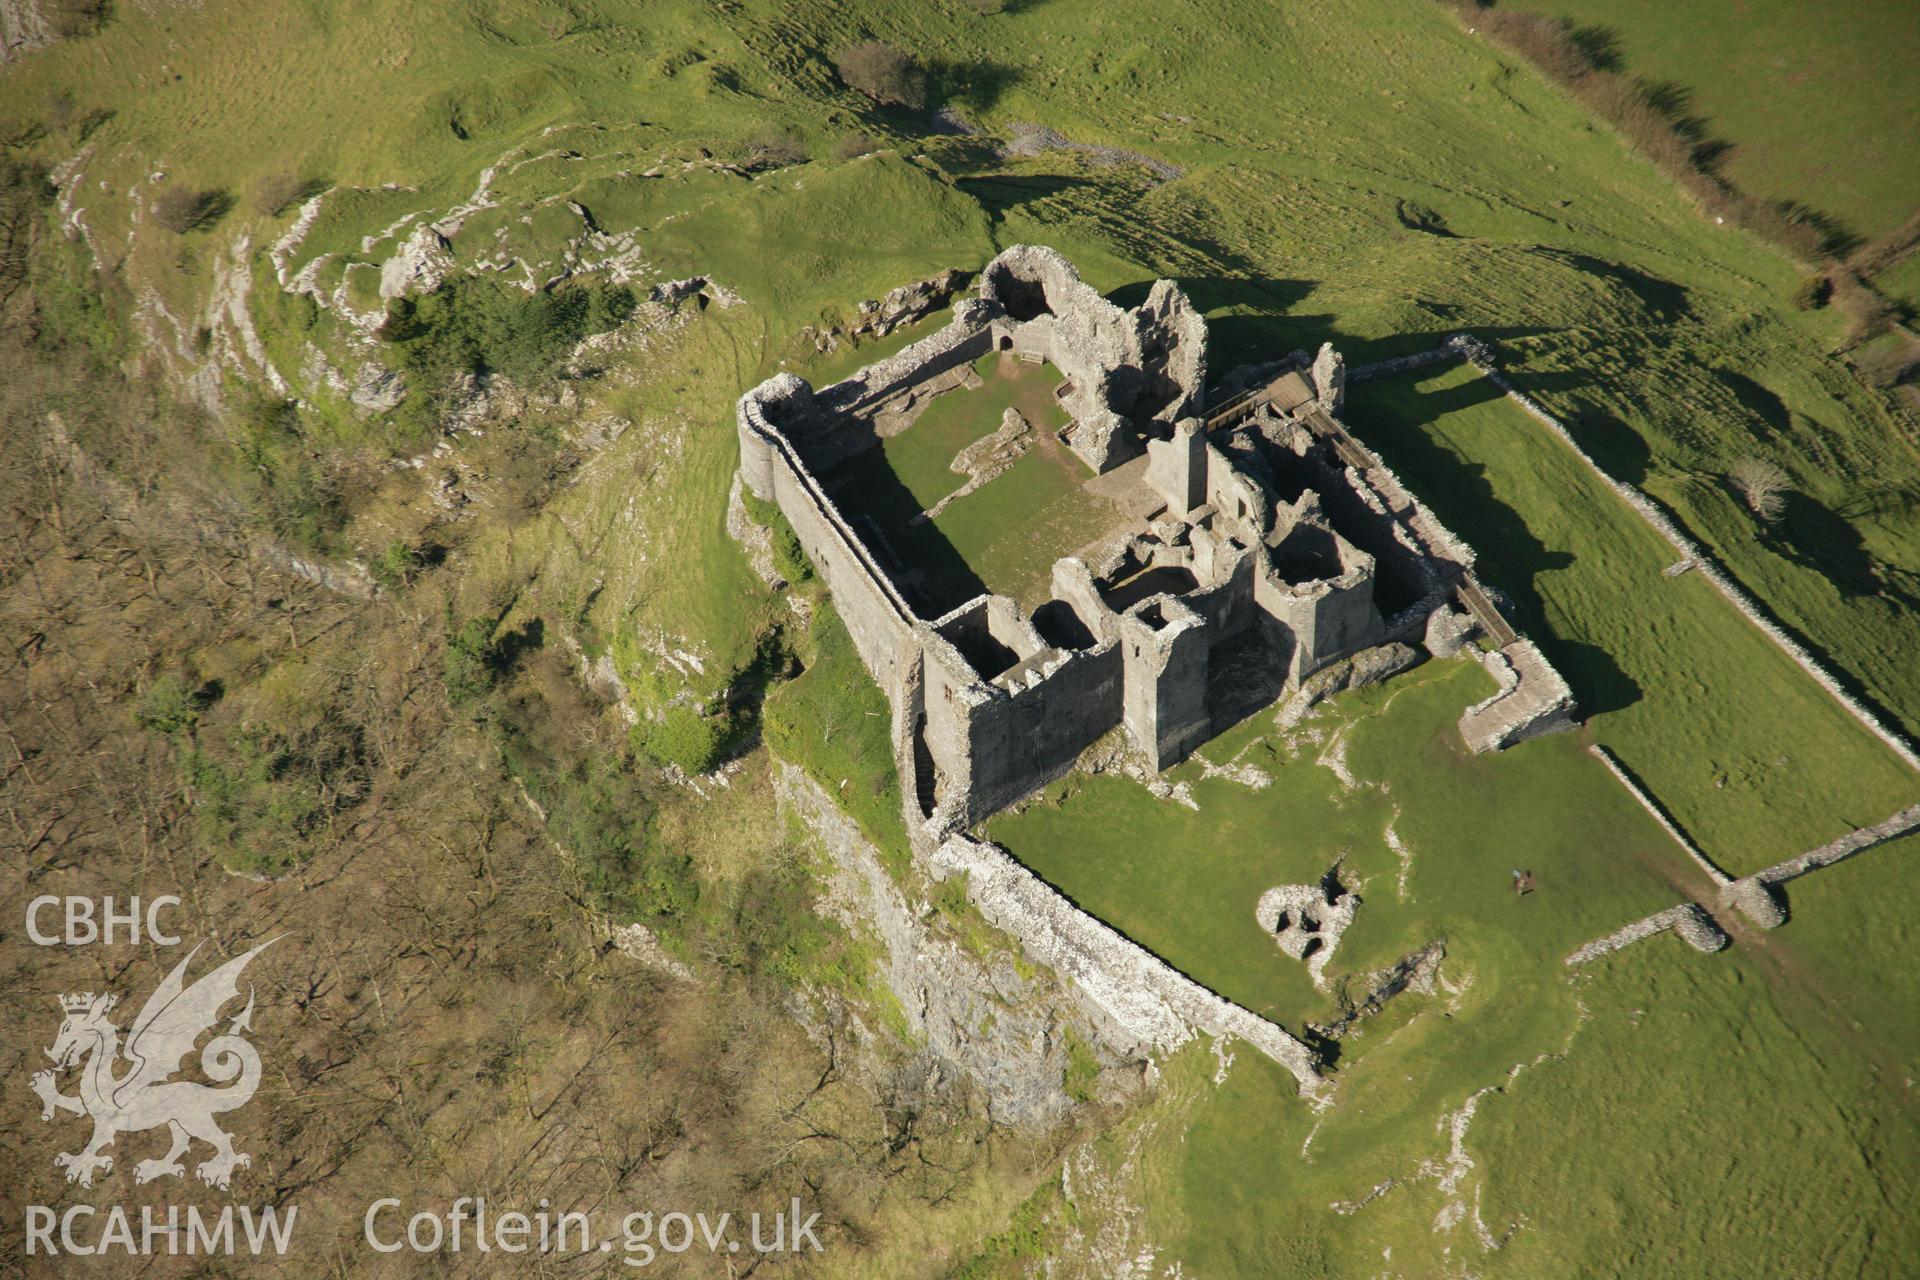 RCAHMW colour oblique aerial photograph of Carreg Cennen Castle. Taken on 21 March 2007 by Toby Driver